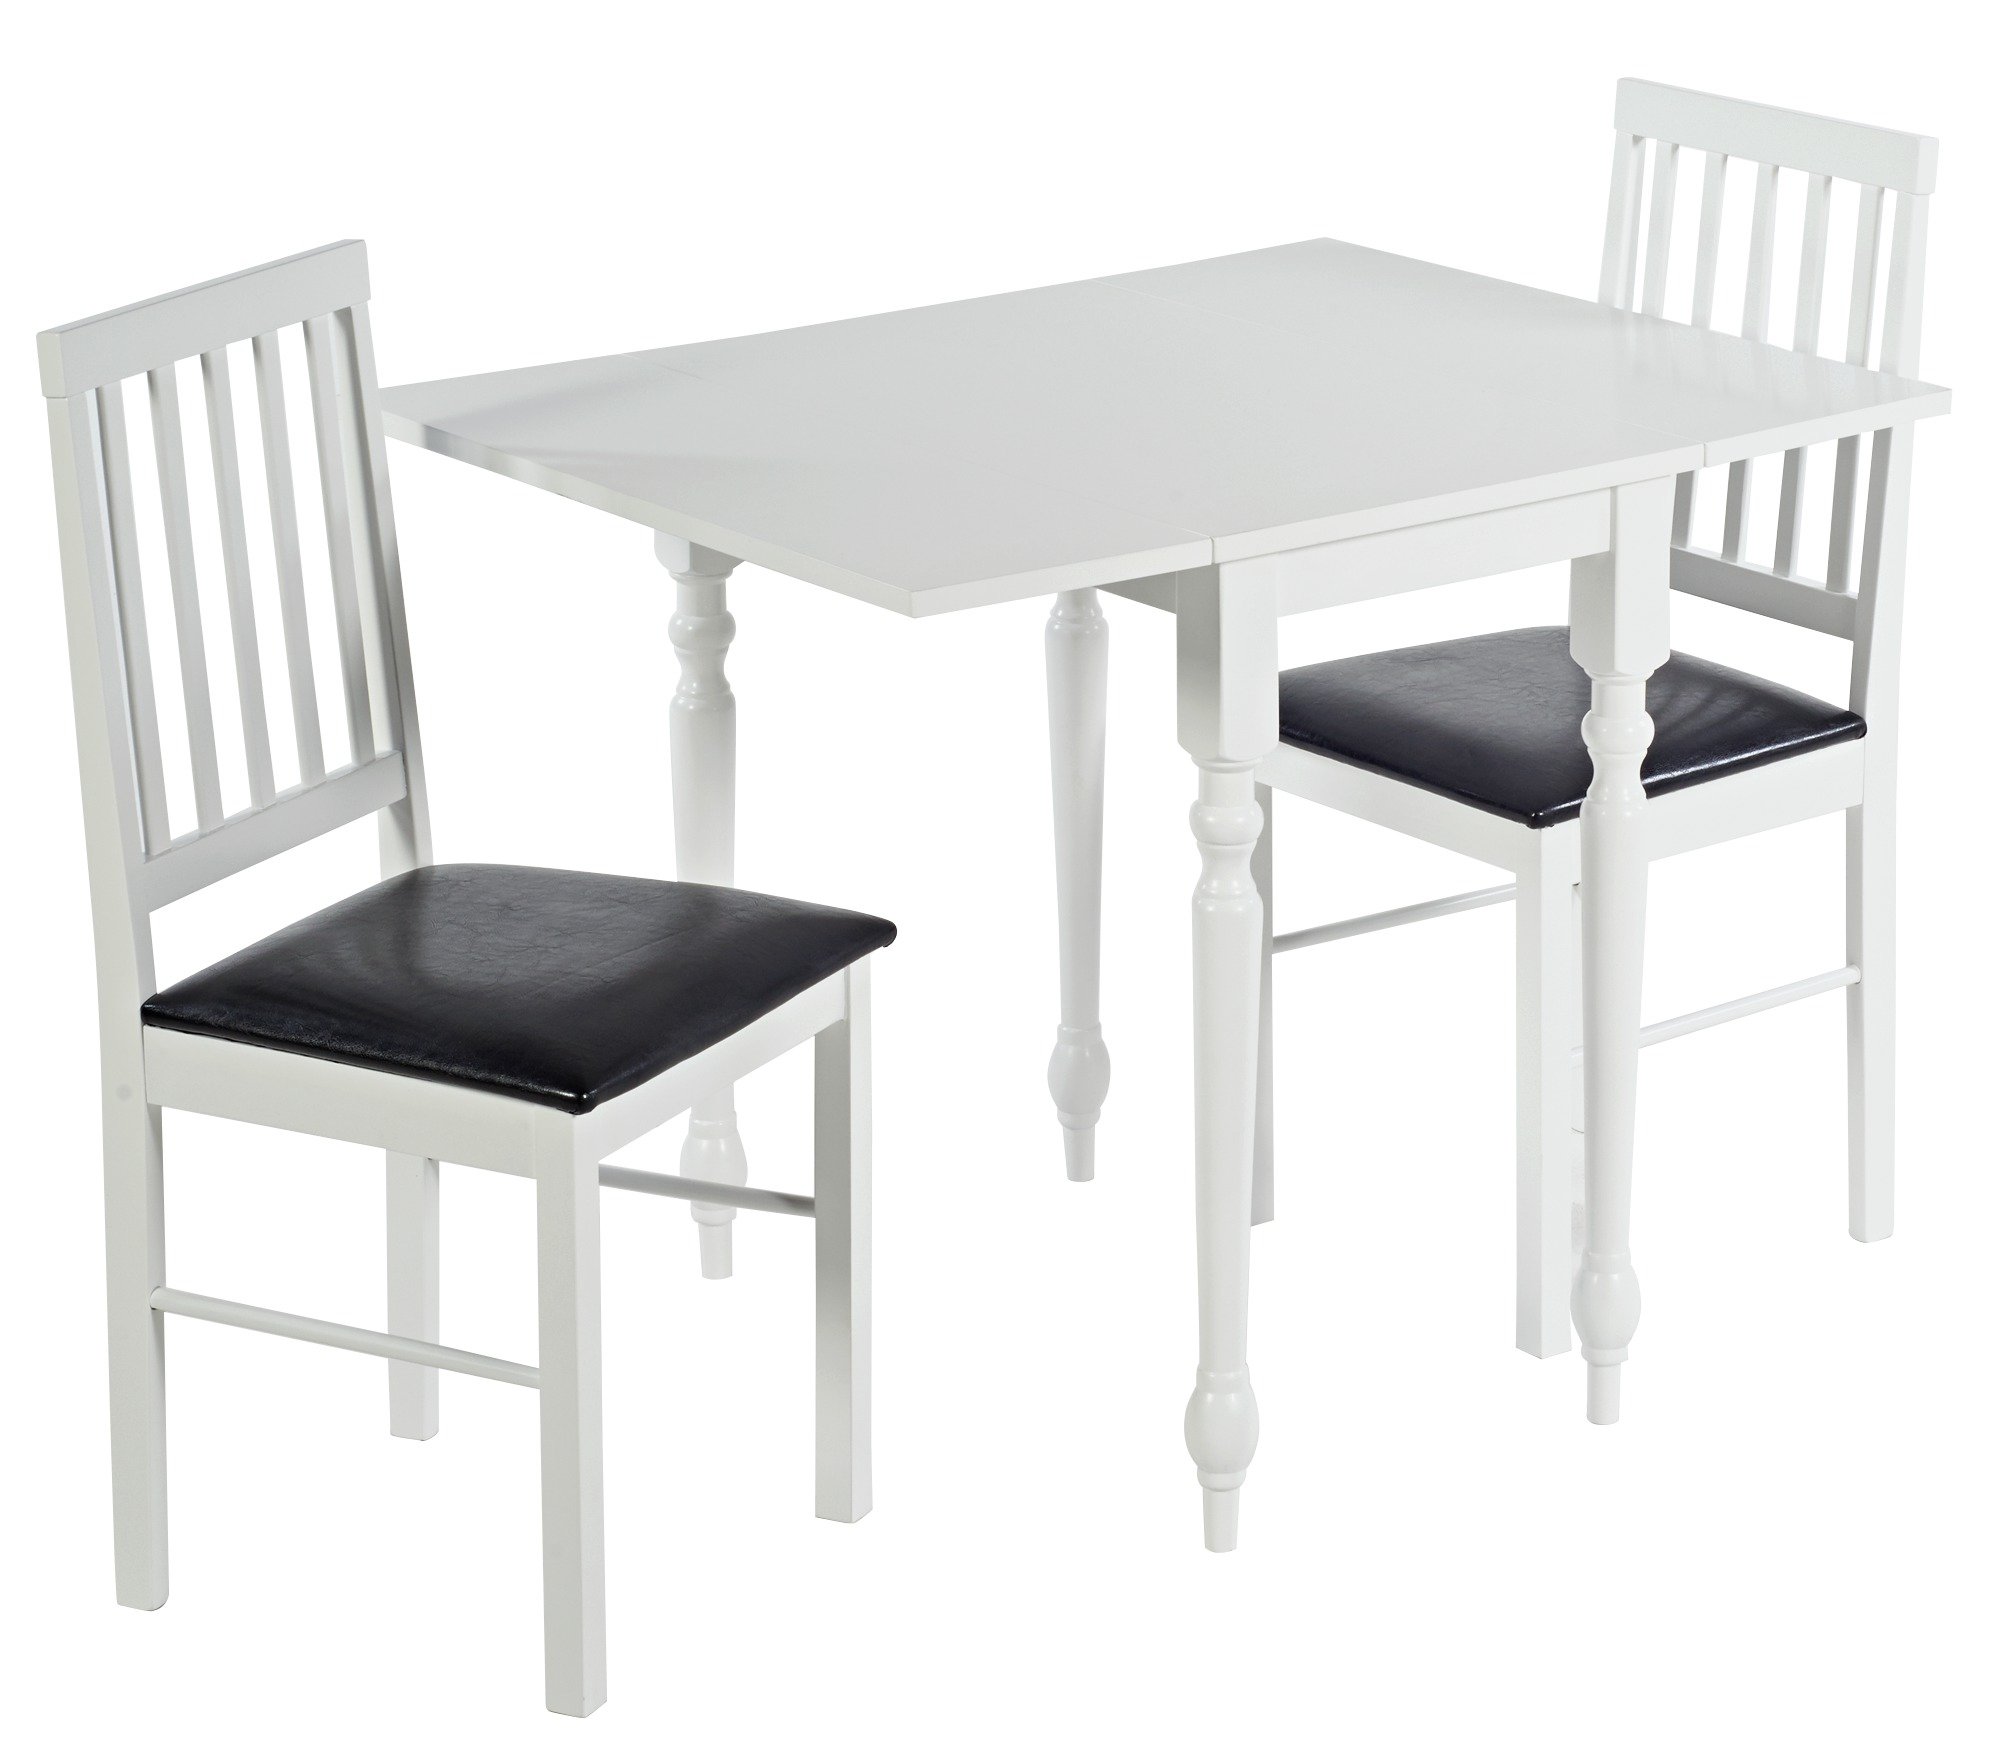  argos kitchen tables